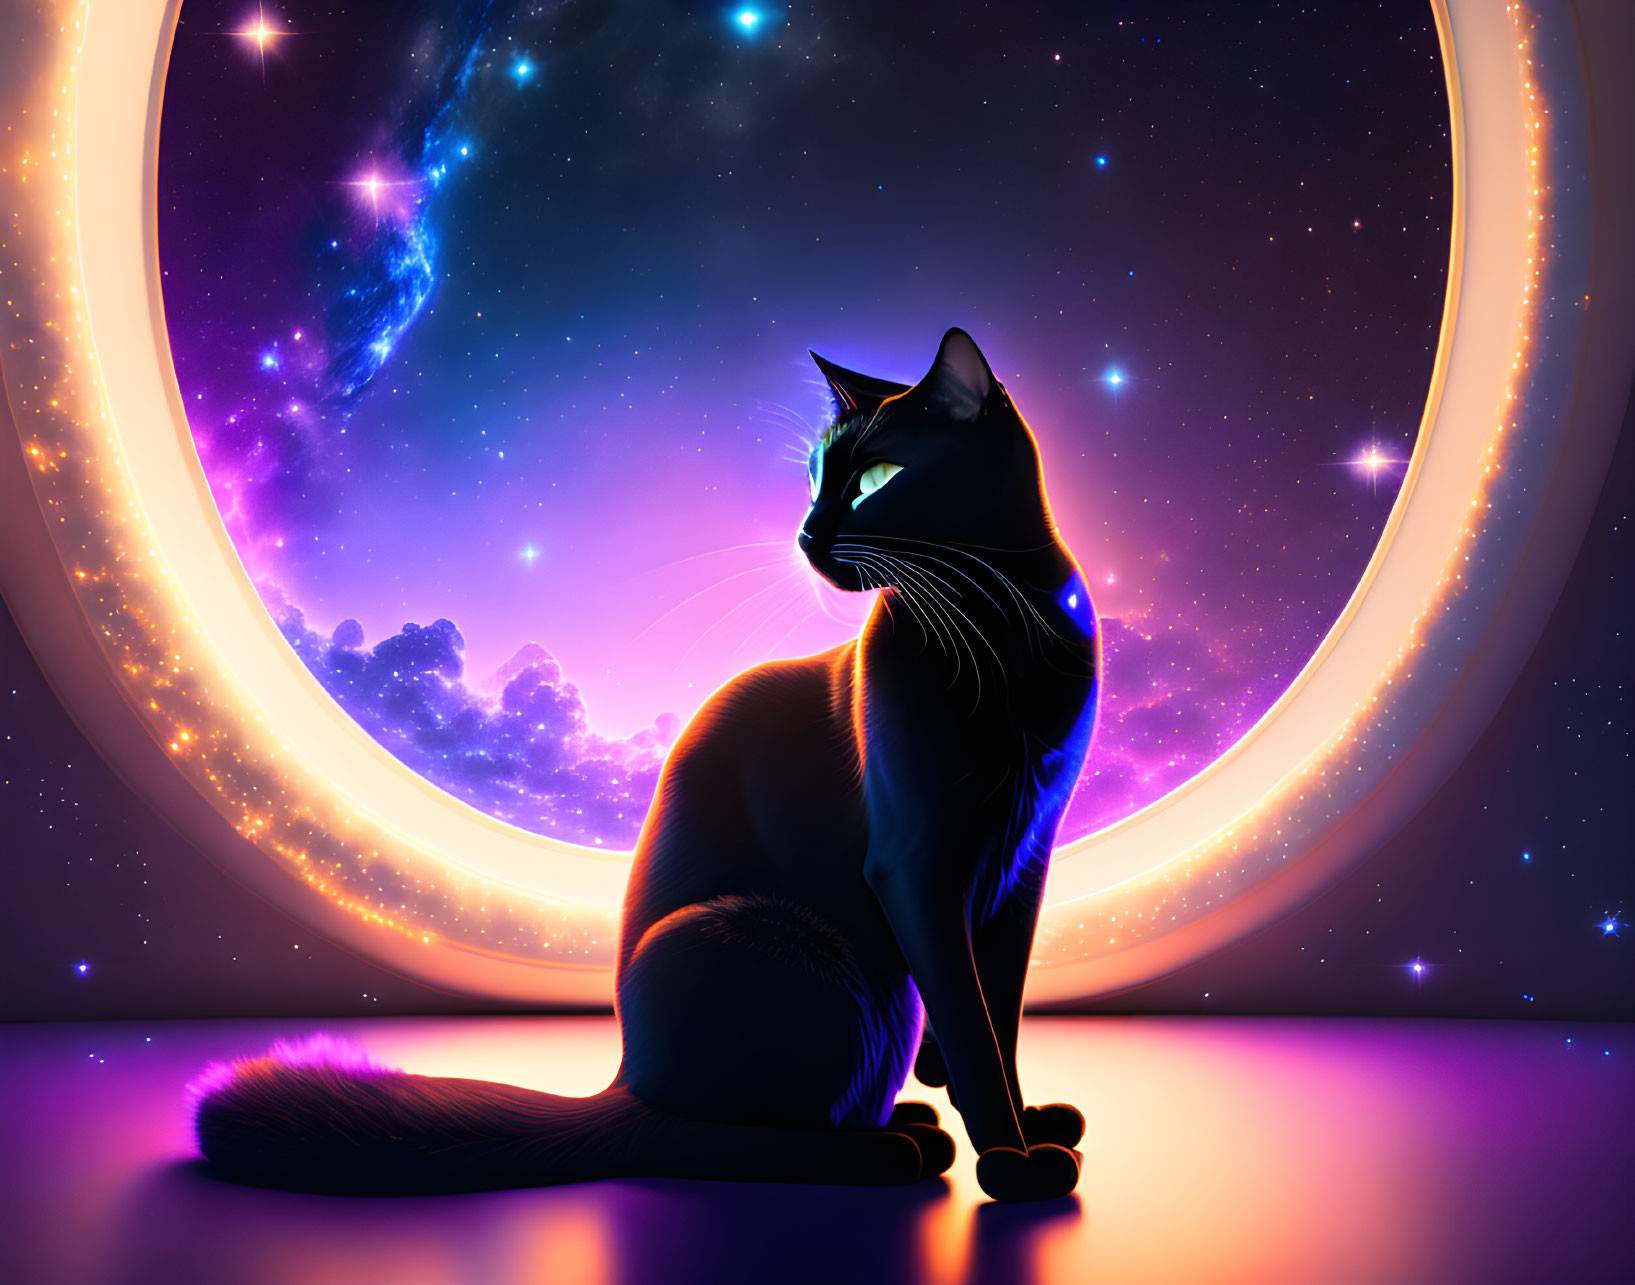 Black Cat in Futuristic Setting with Cosmic Window View